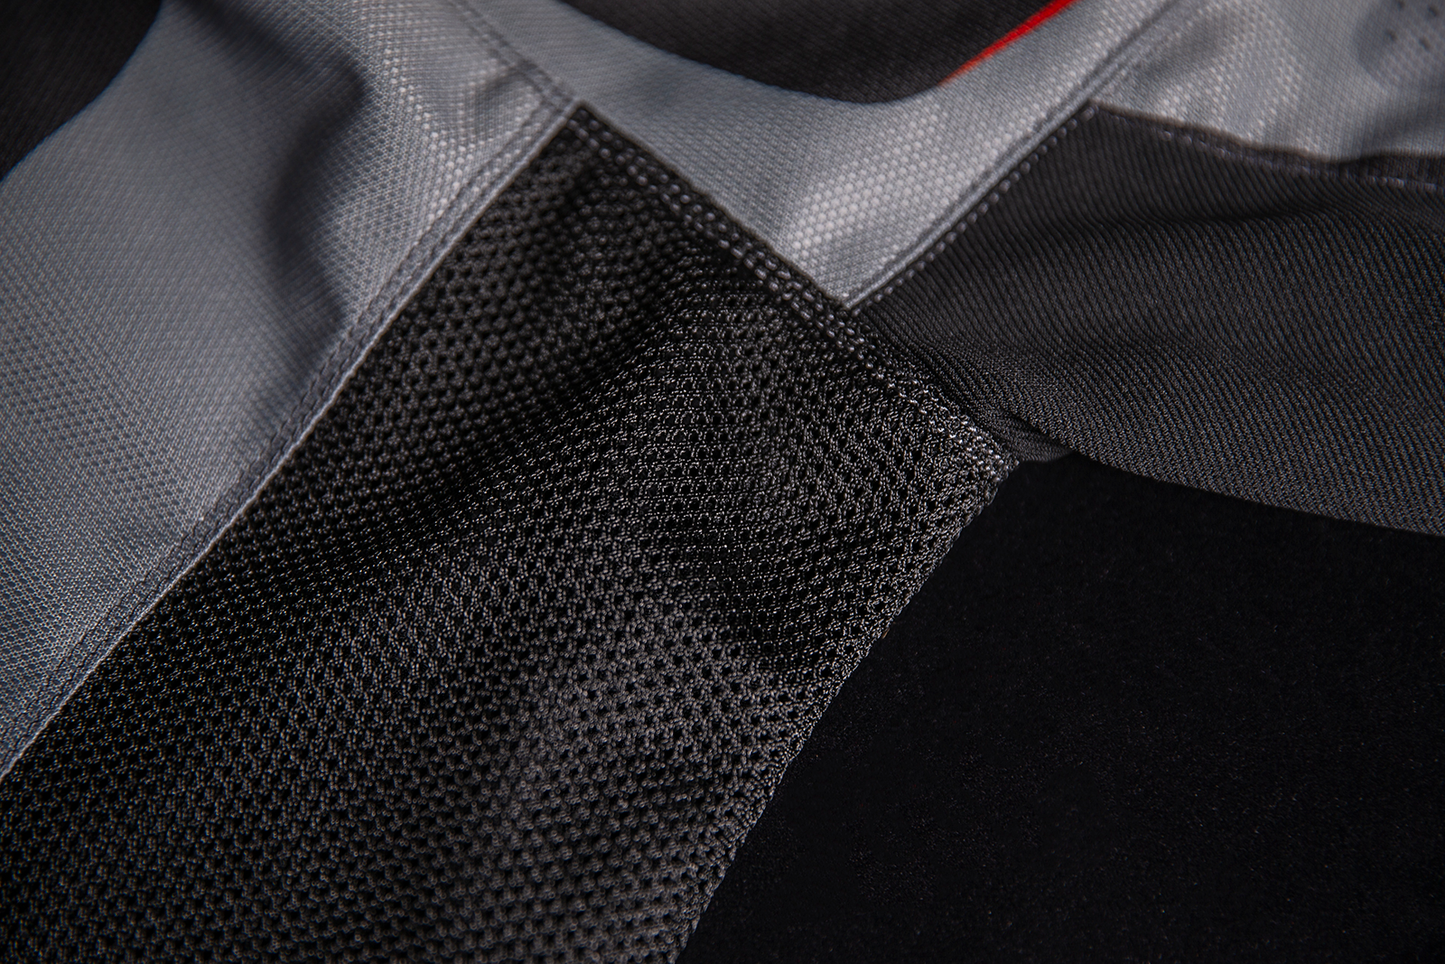 ICON Hooligan Ultrabolt Jacket - Black/Gray/Red - Small 2820-5528